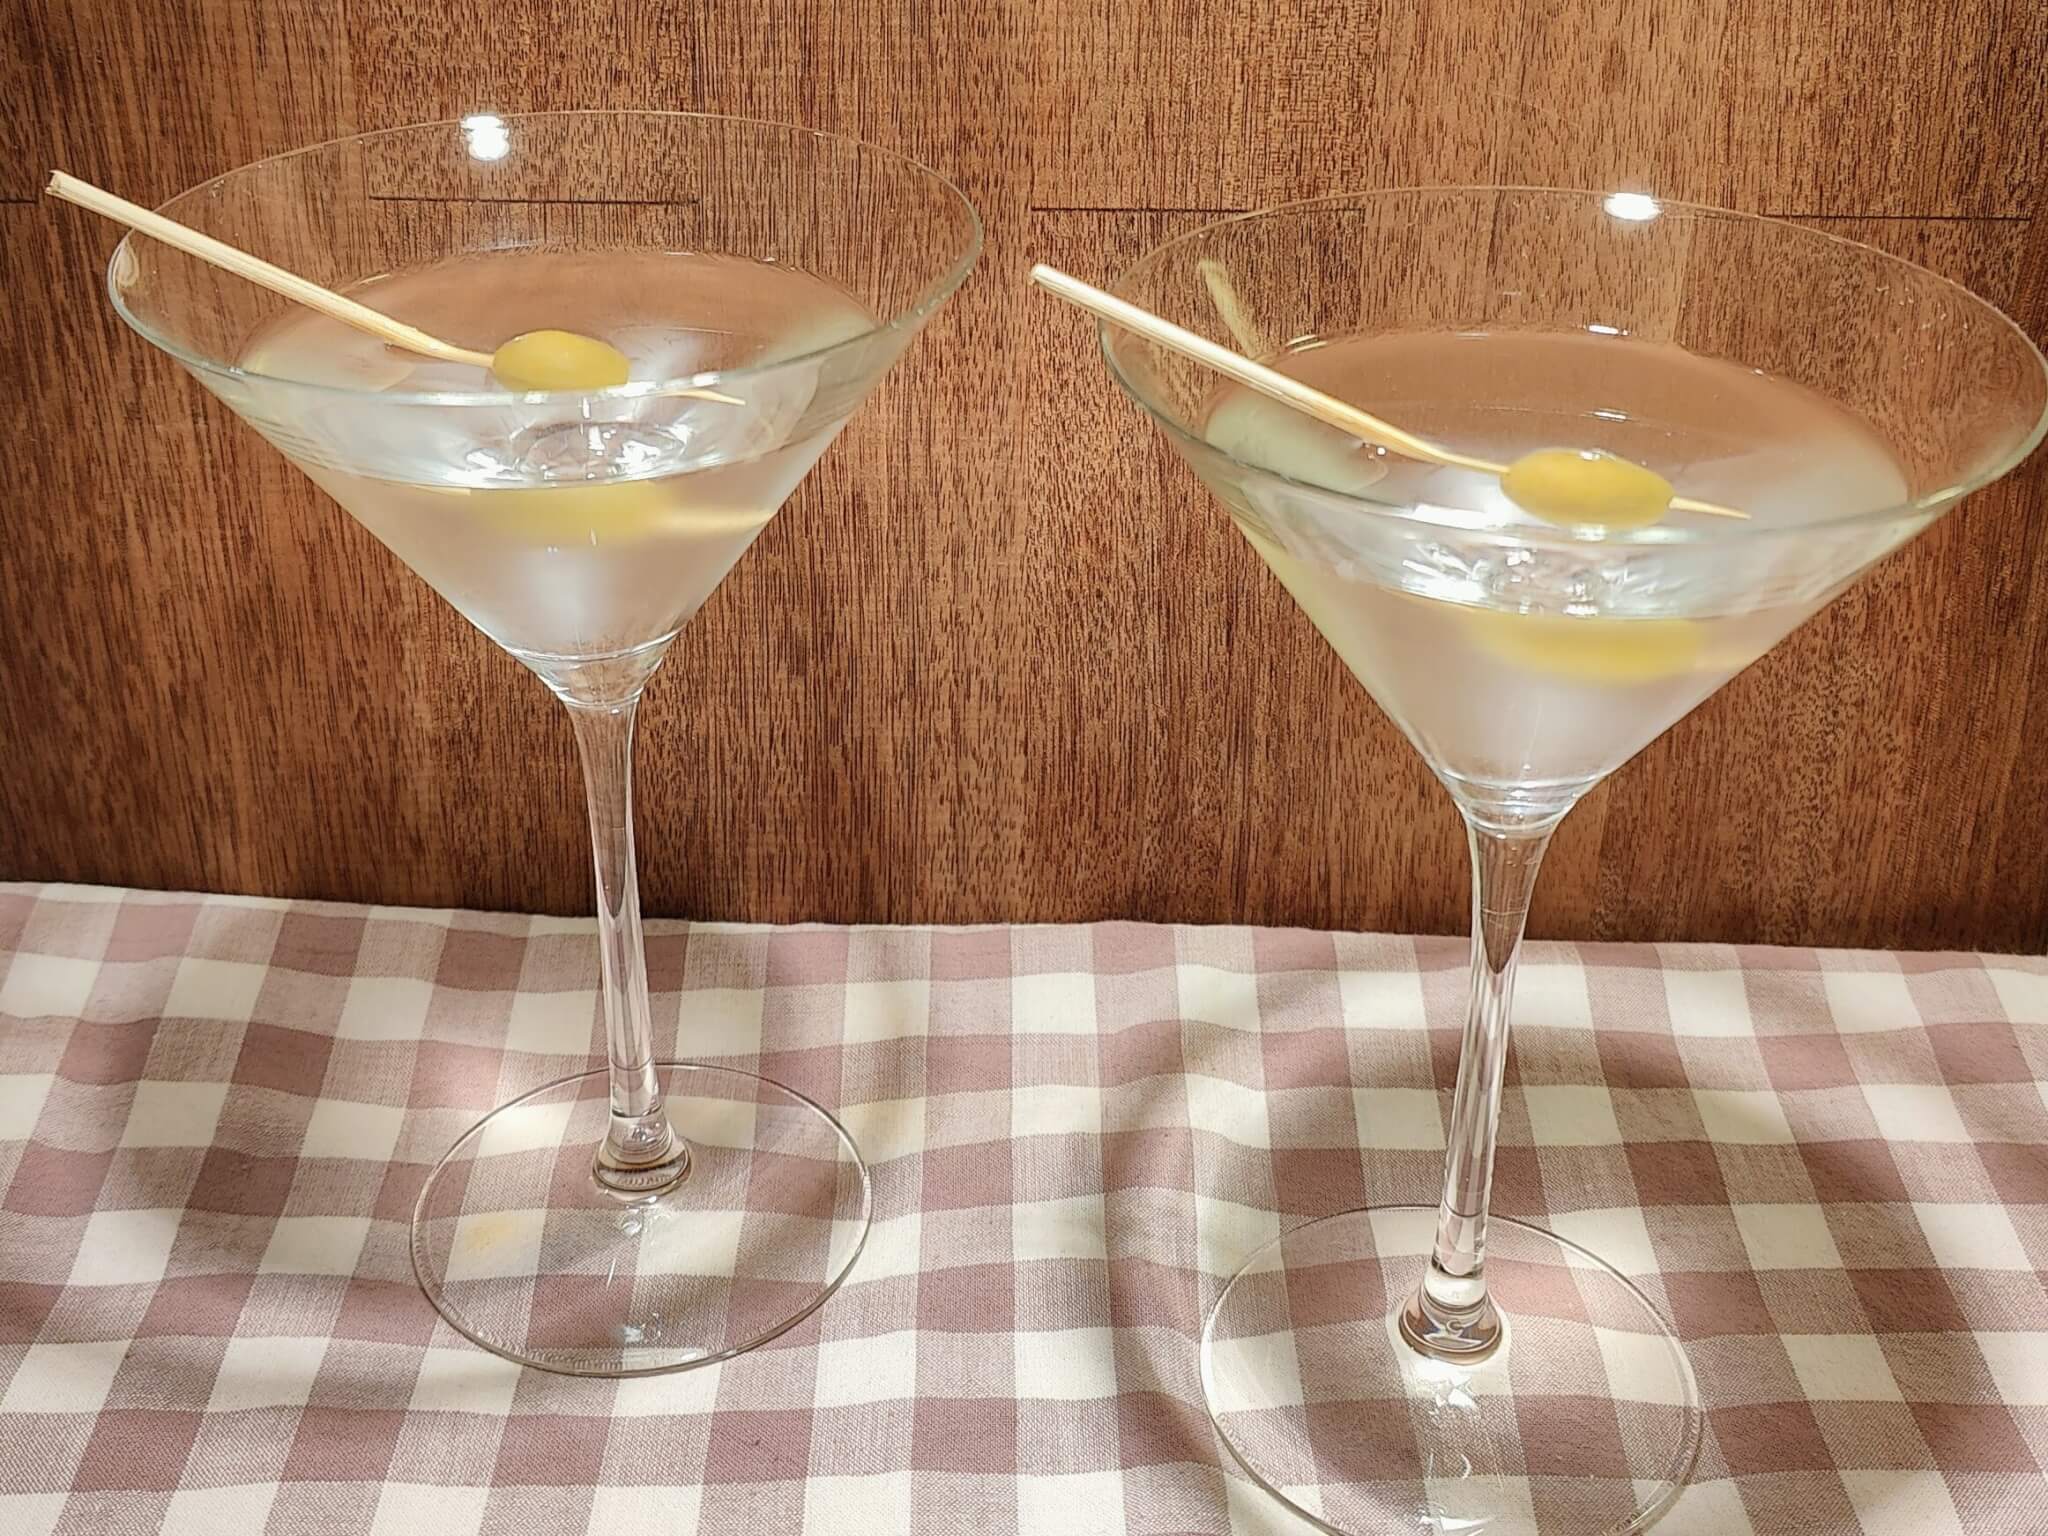 Dry Martini - Shaken not stirred